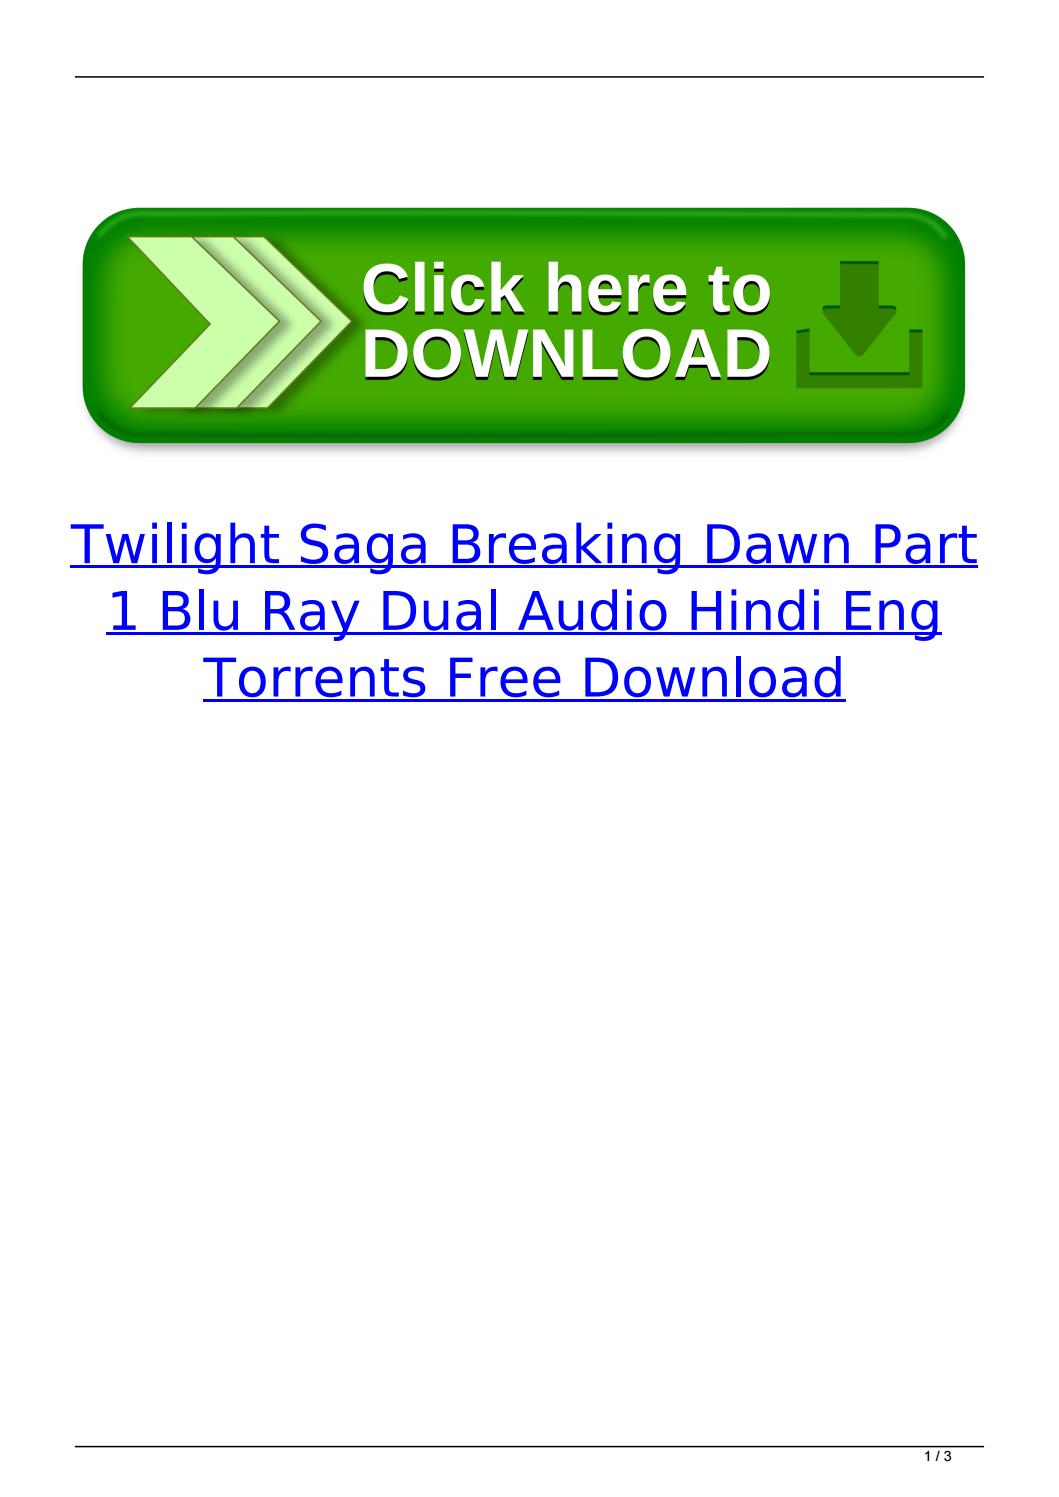 Free Download Twilight Saga Breaking Dawn 1 In Hindi In 480p Lasopasustainable